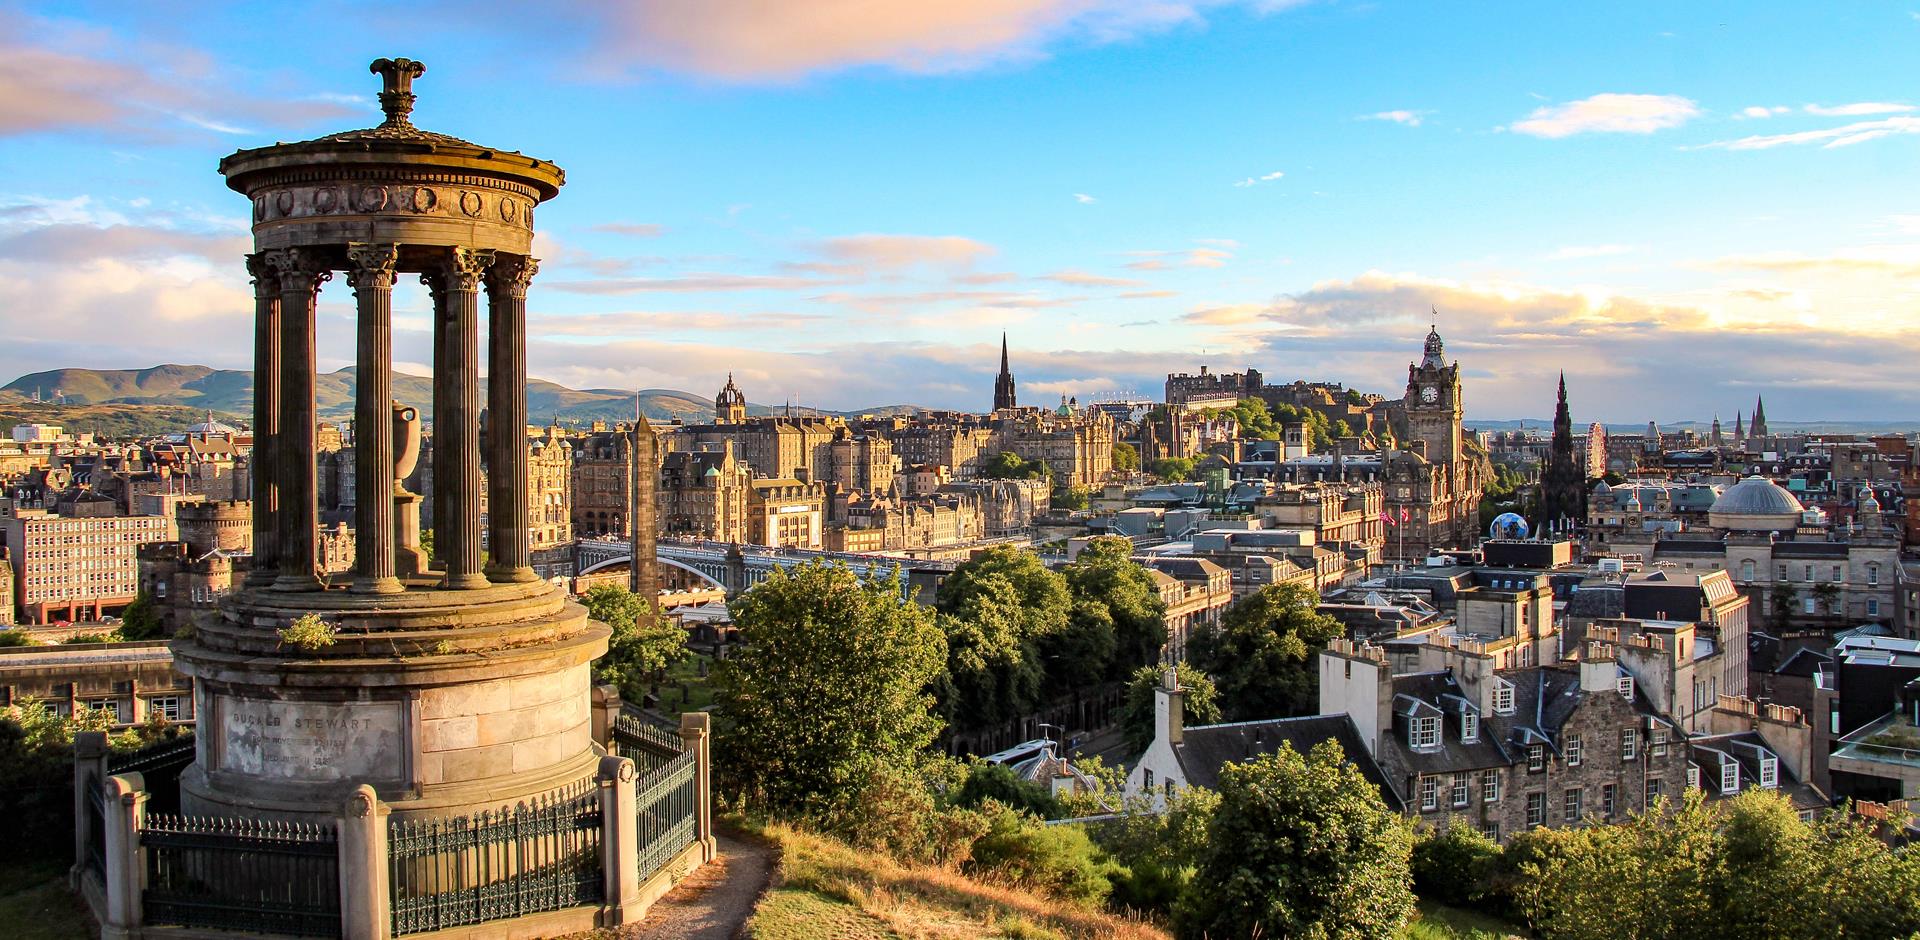 skyline view of Edinburgh